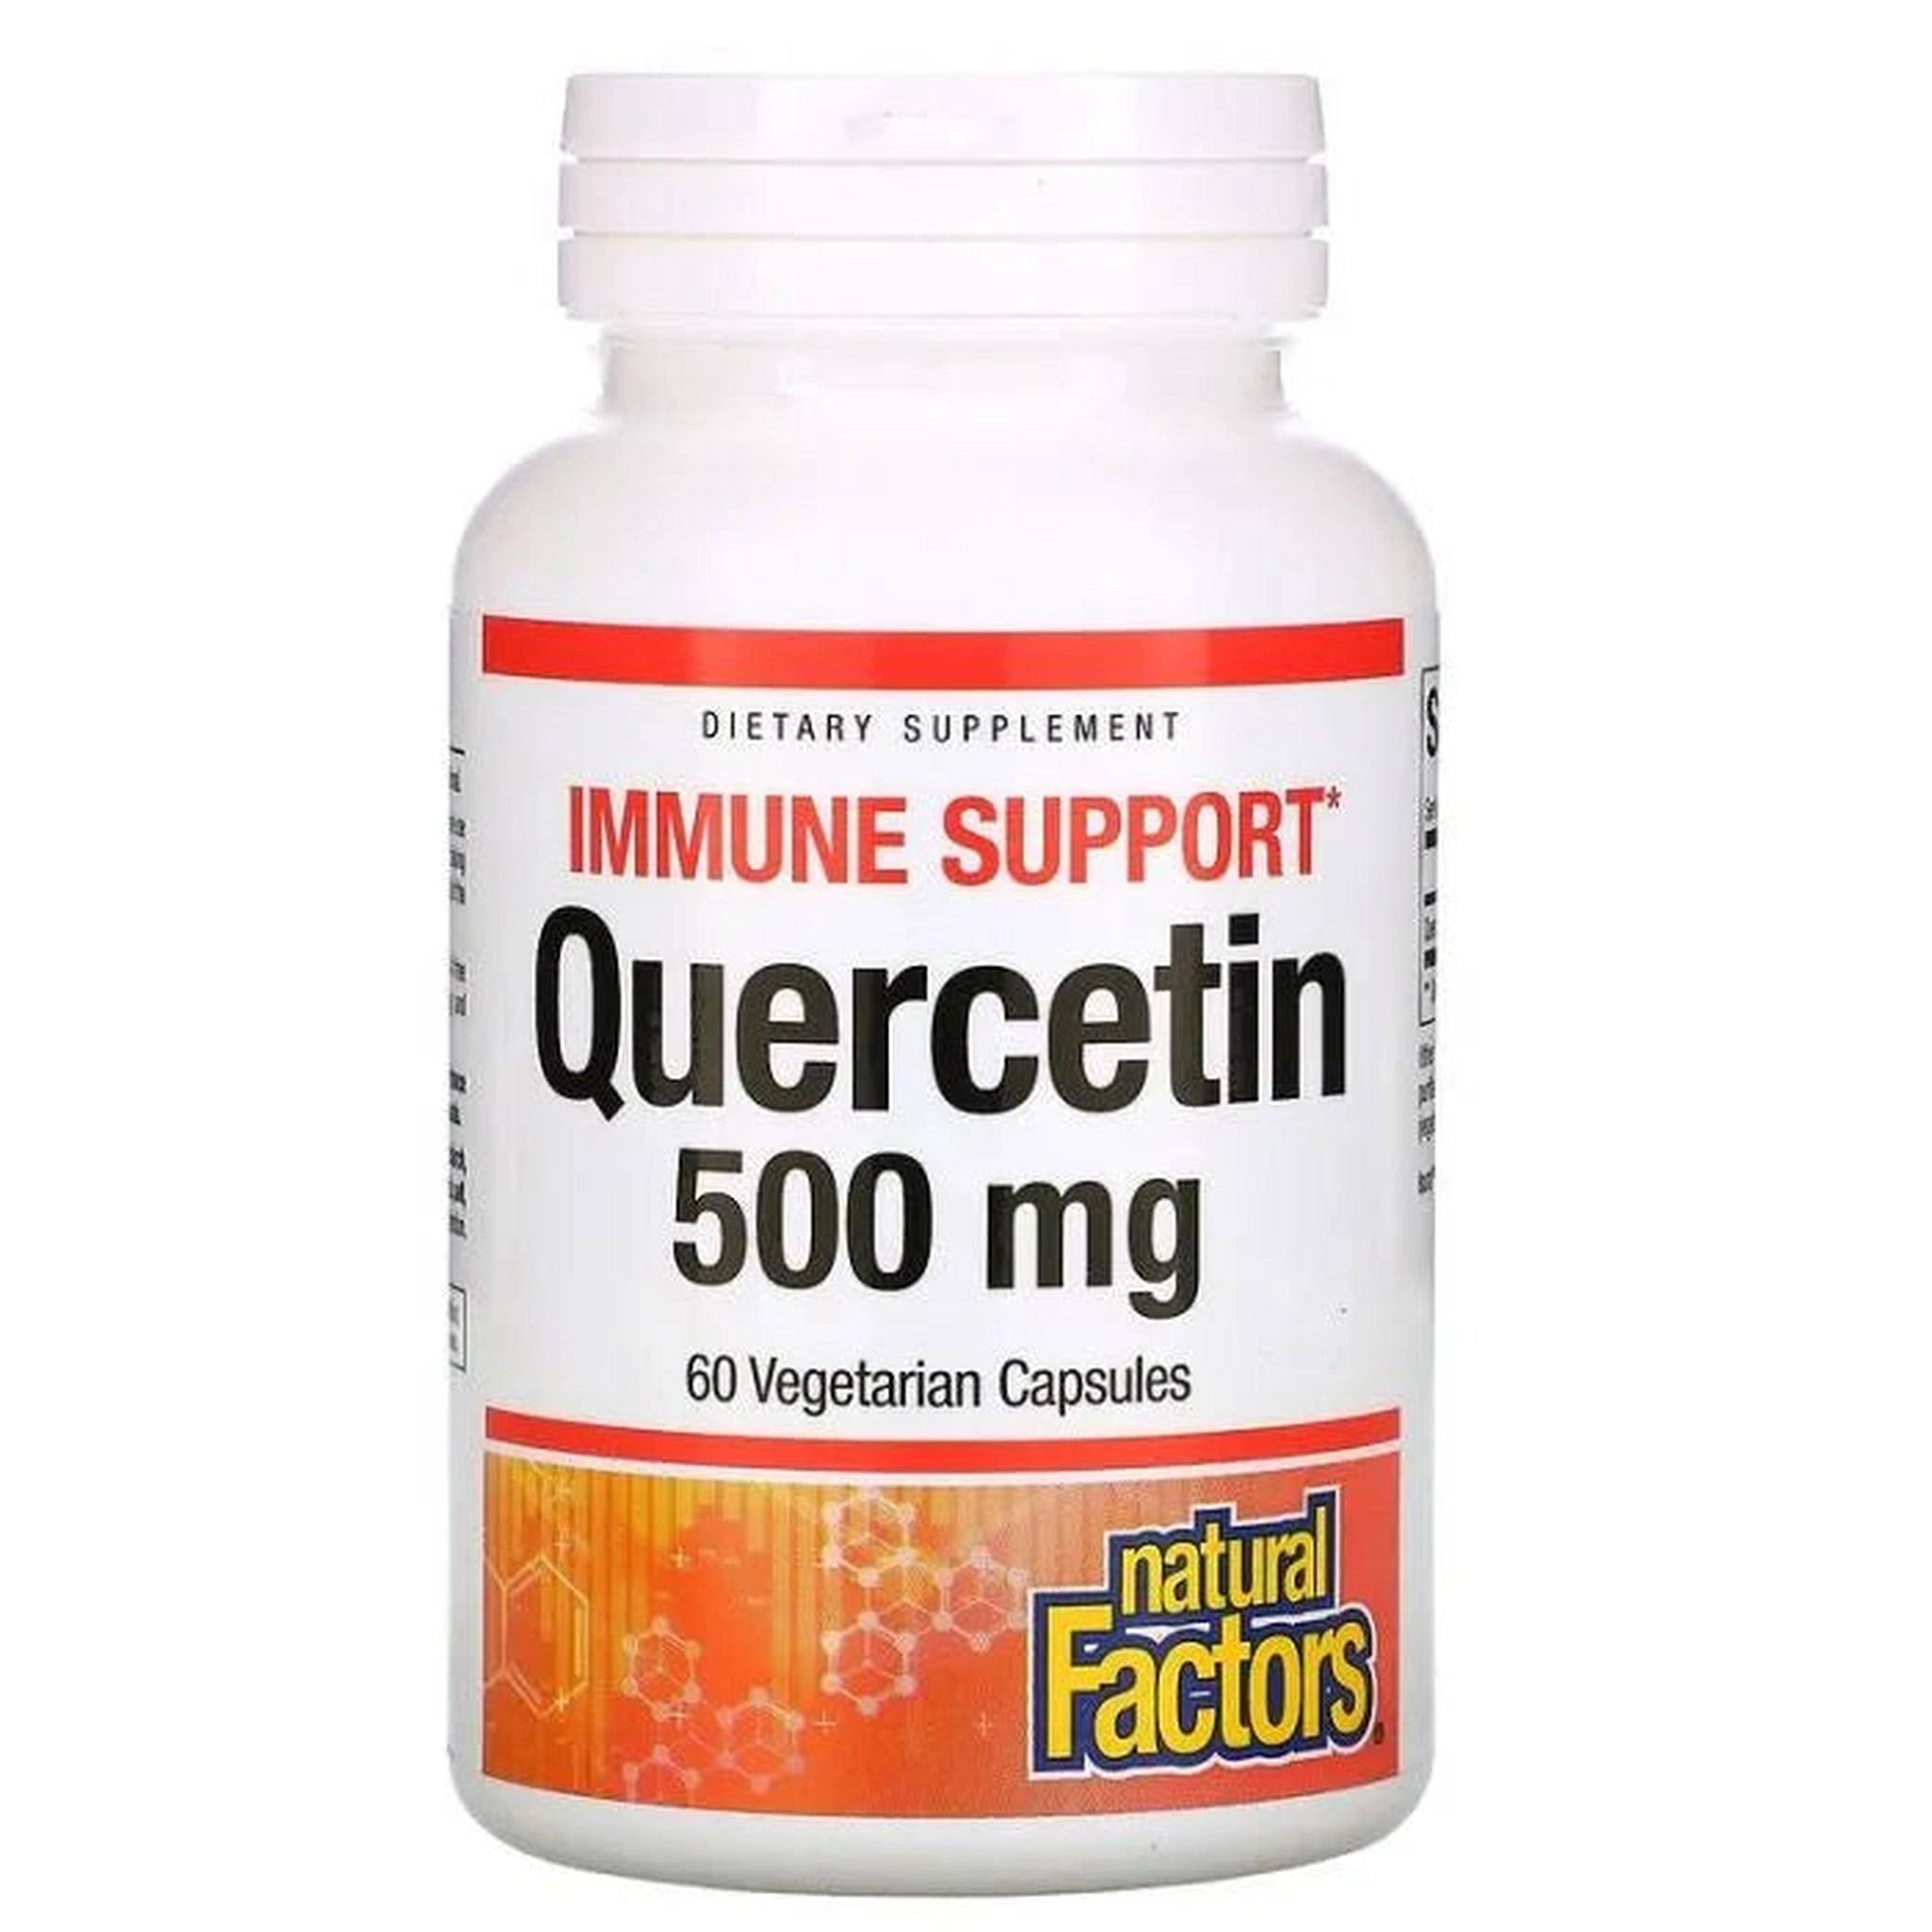 Natural Factors Quercetin, 500 mg, 60 Vegetarian Capsules